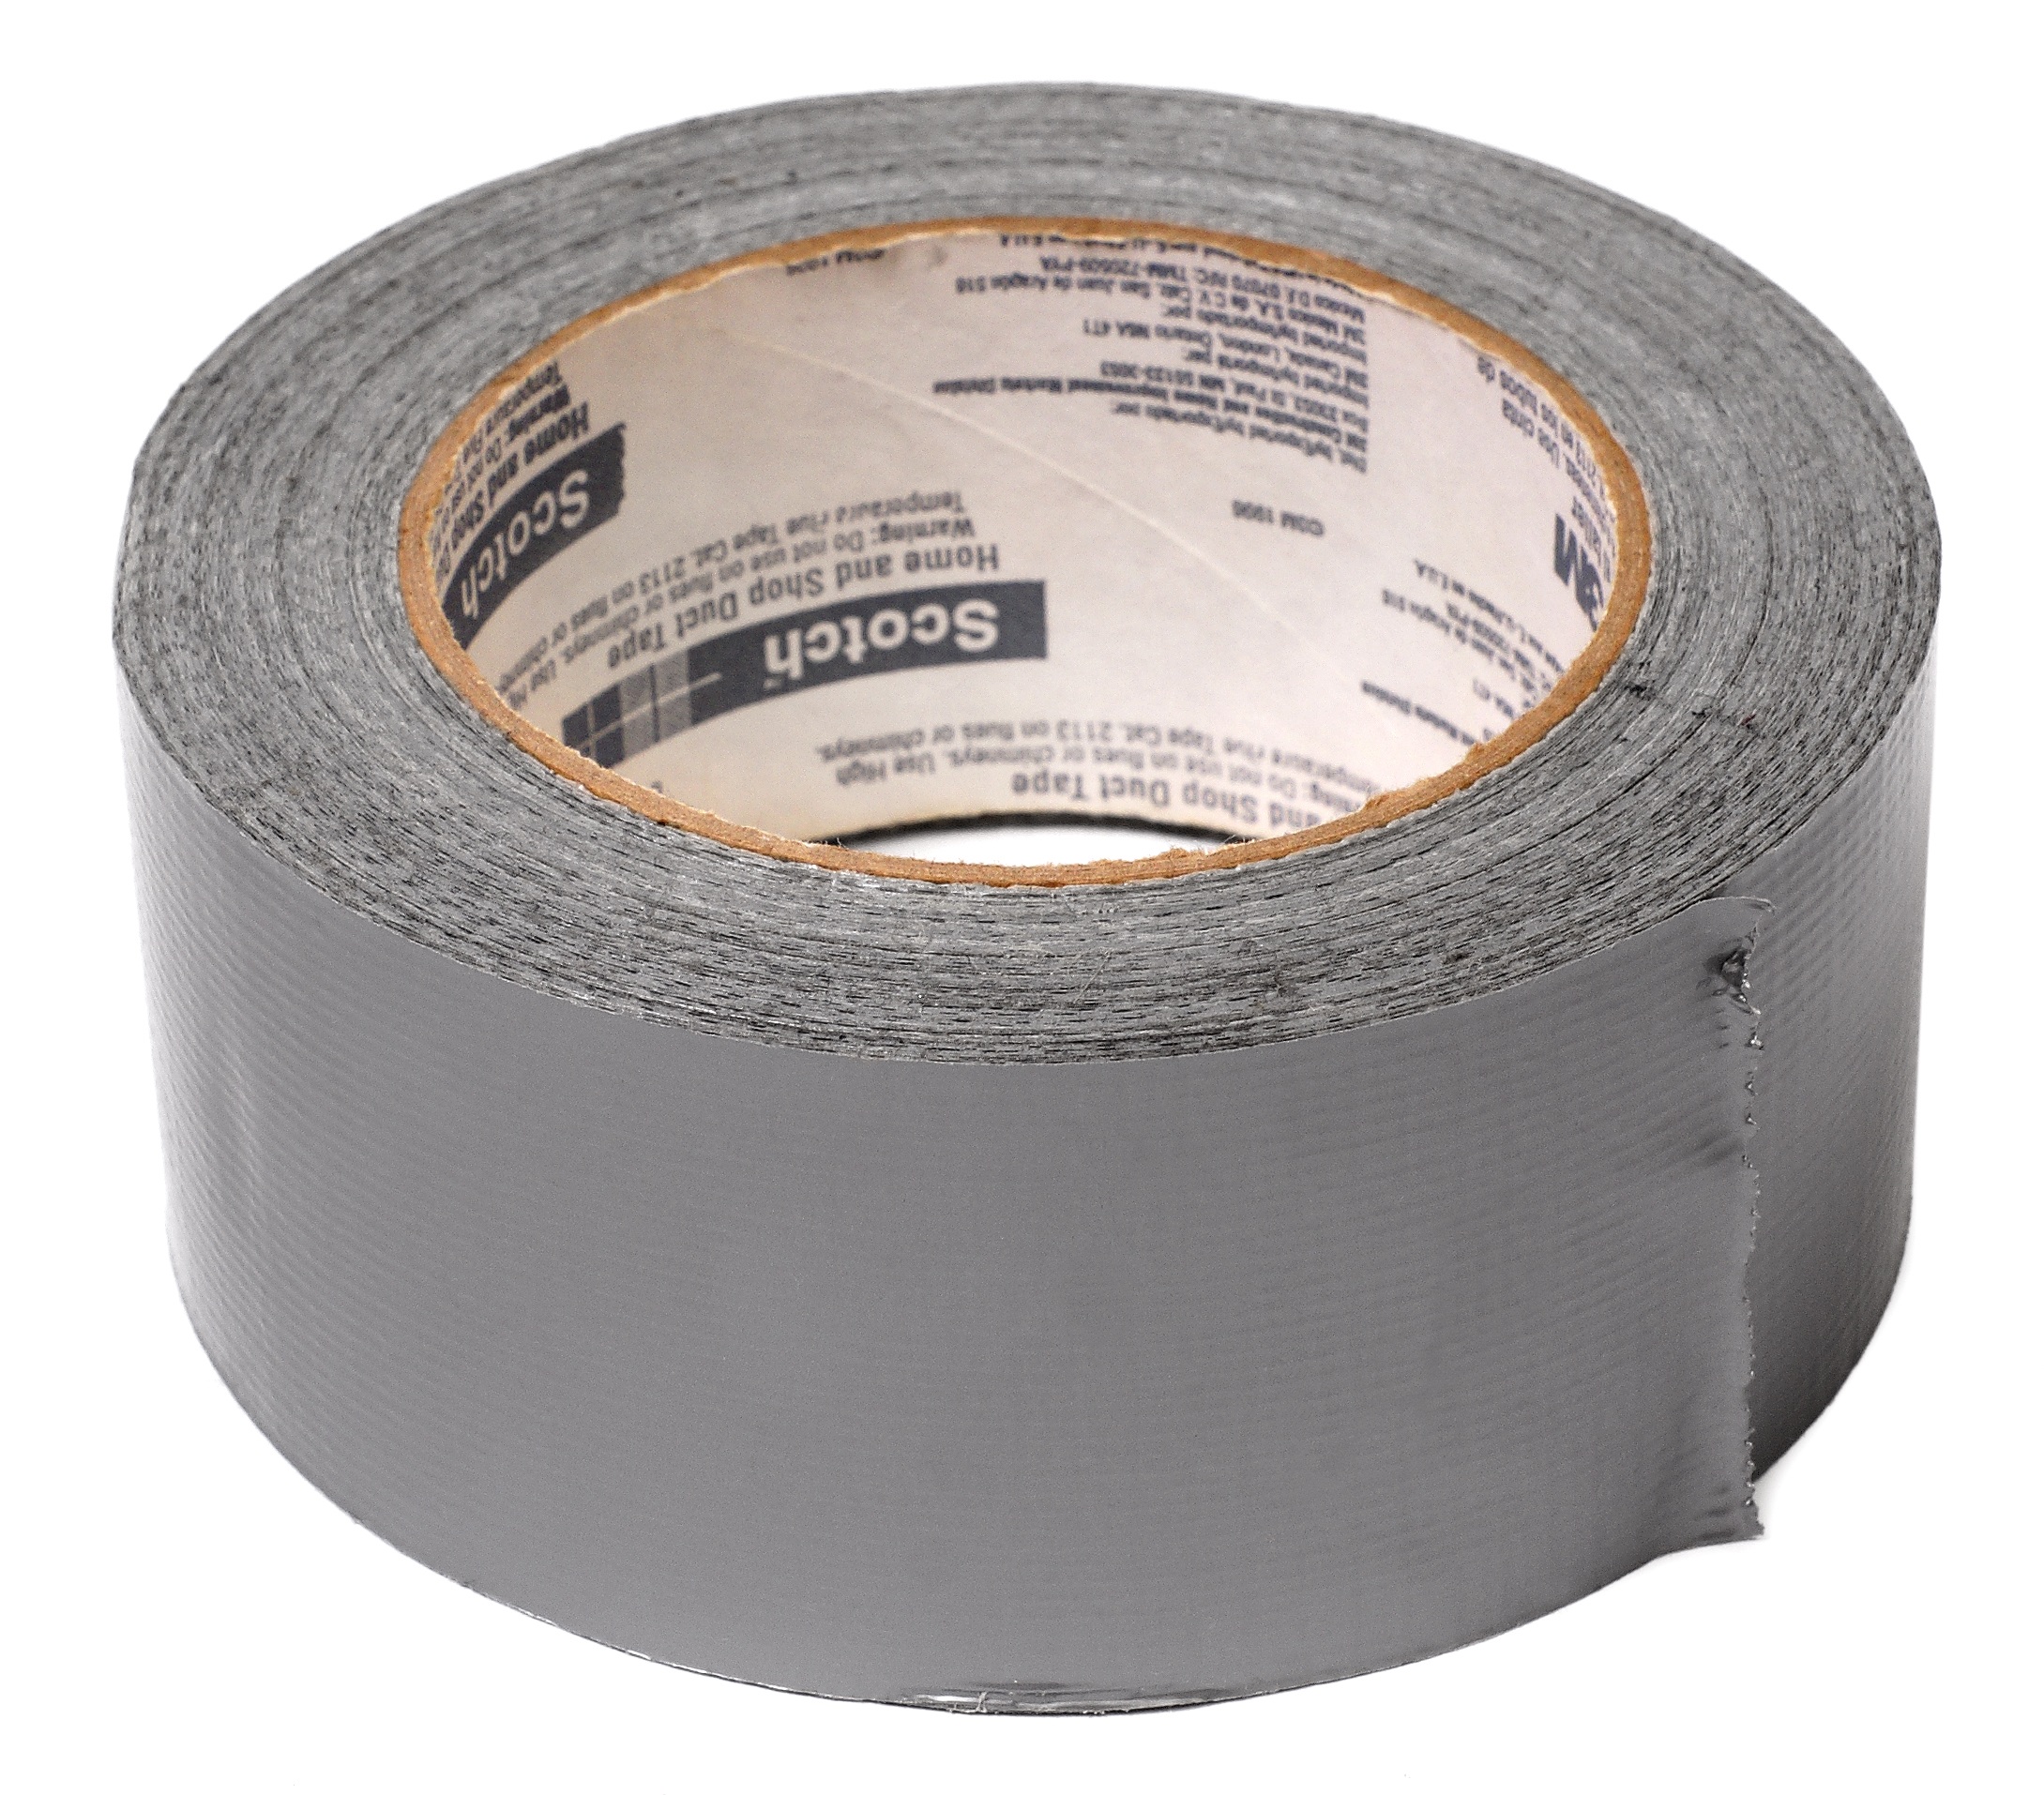 Repair Equipment Gray Duct Tape Label Silver 1386754 Pxhere.com